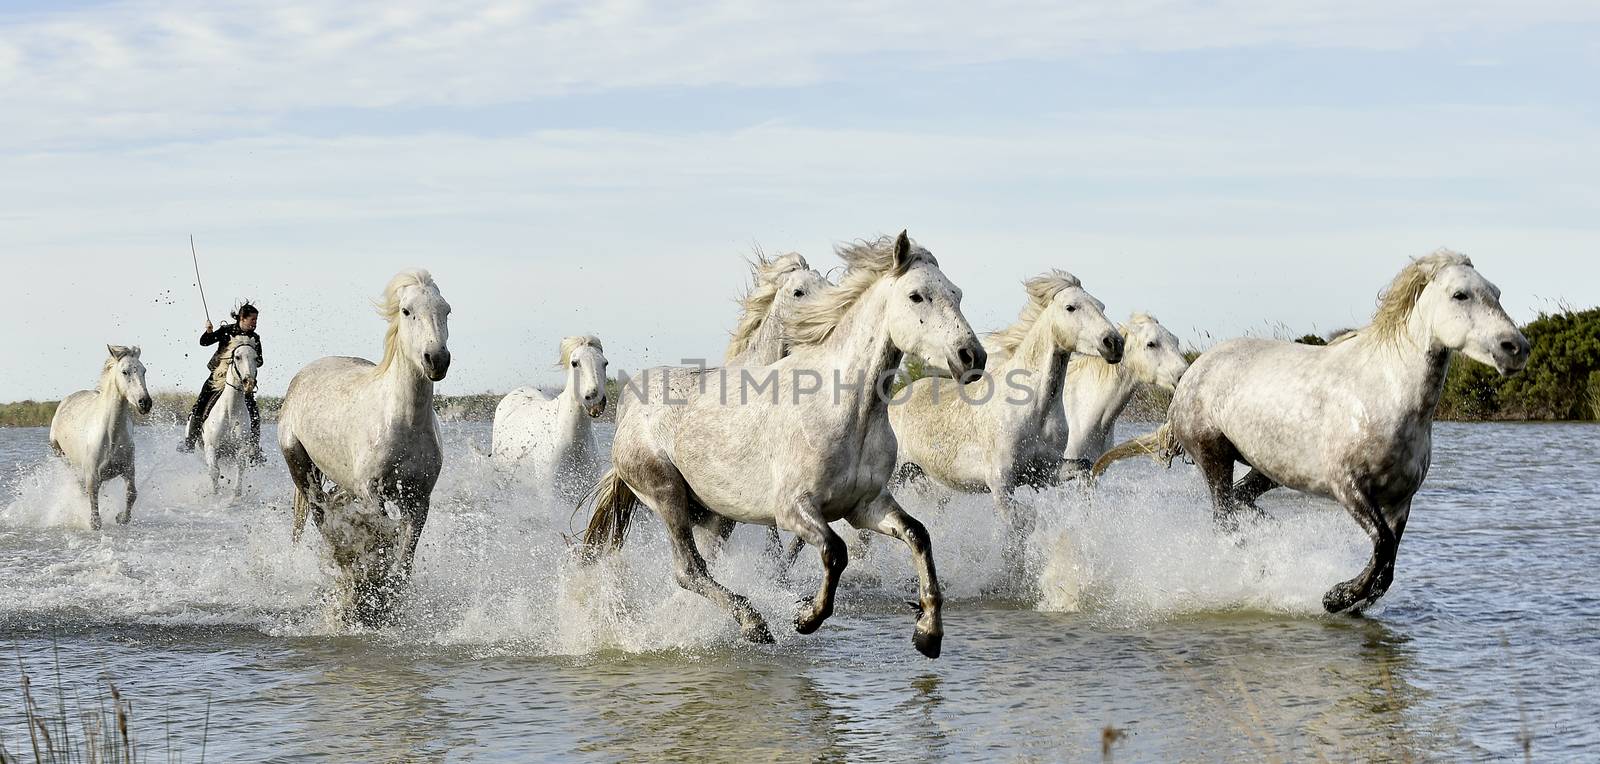 Running White horses through water by SURZ